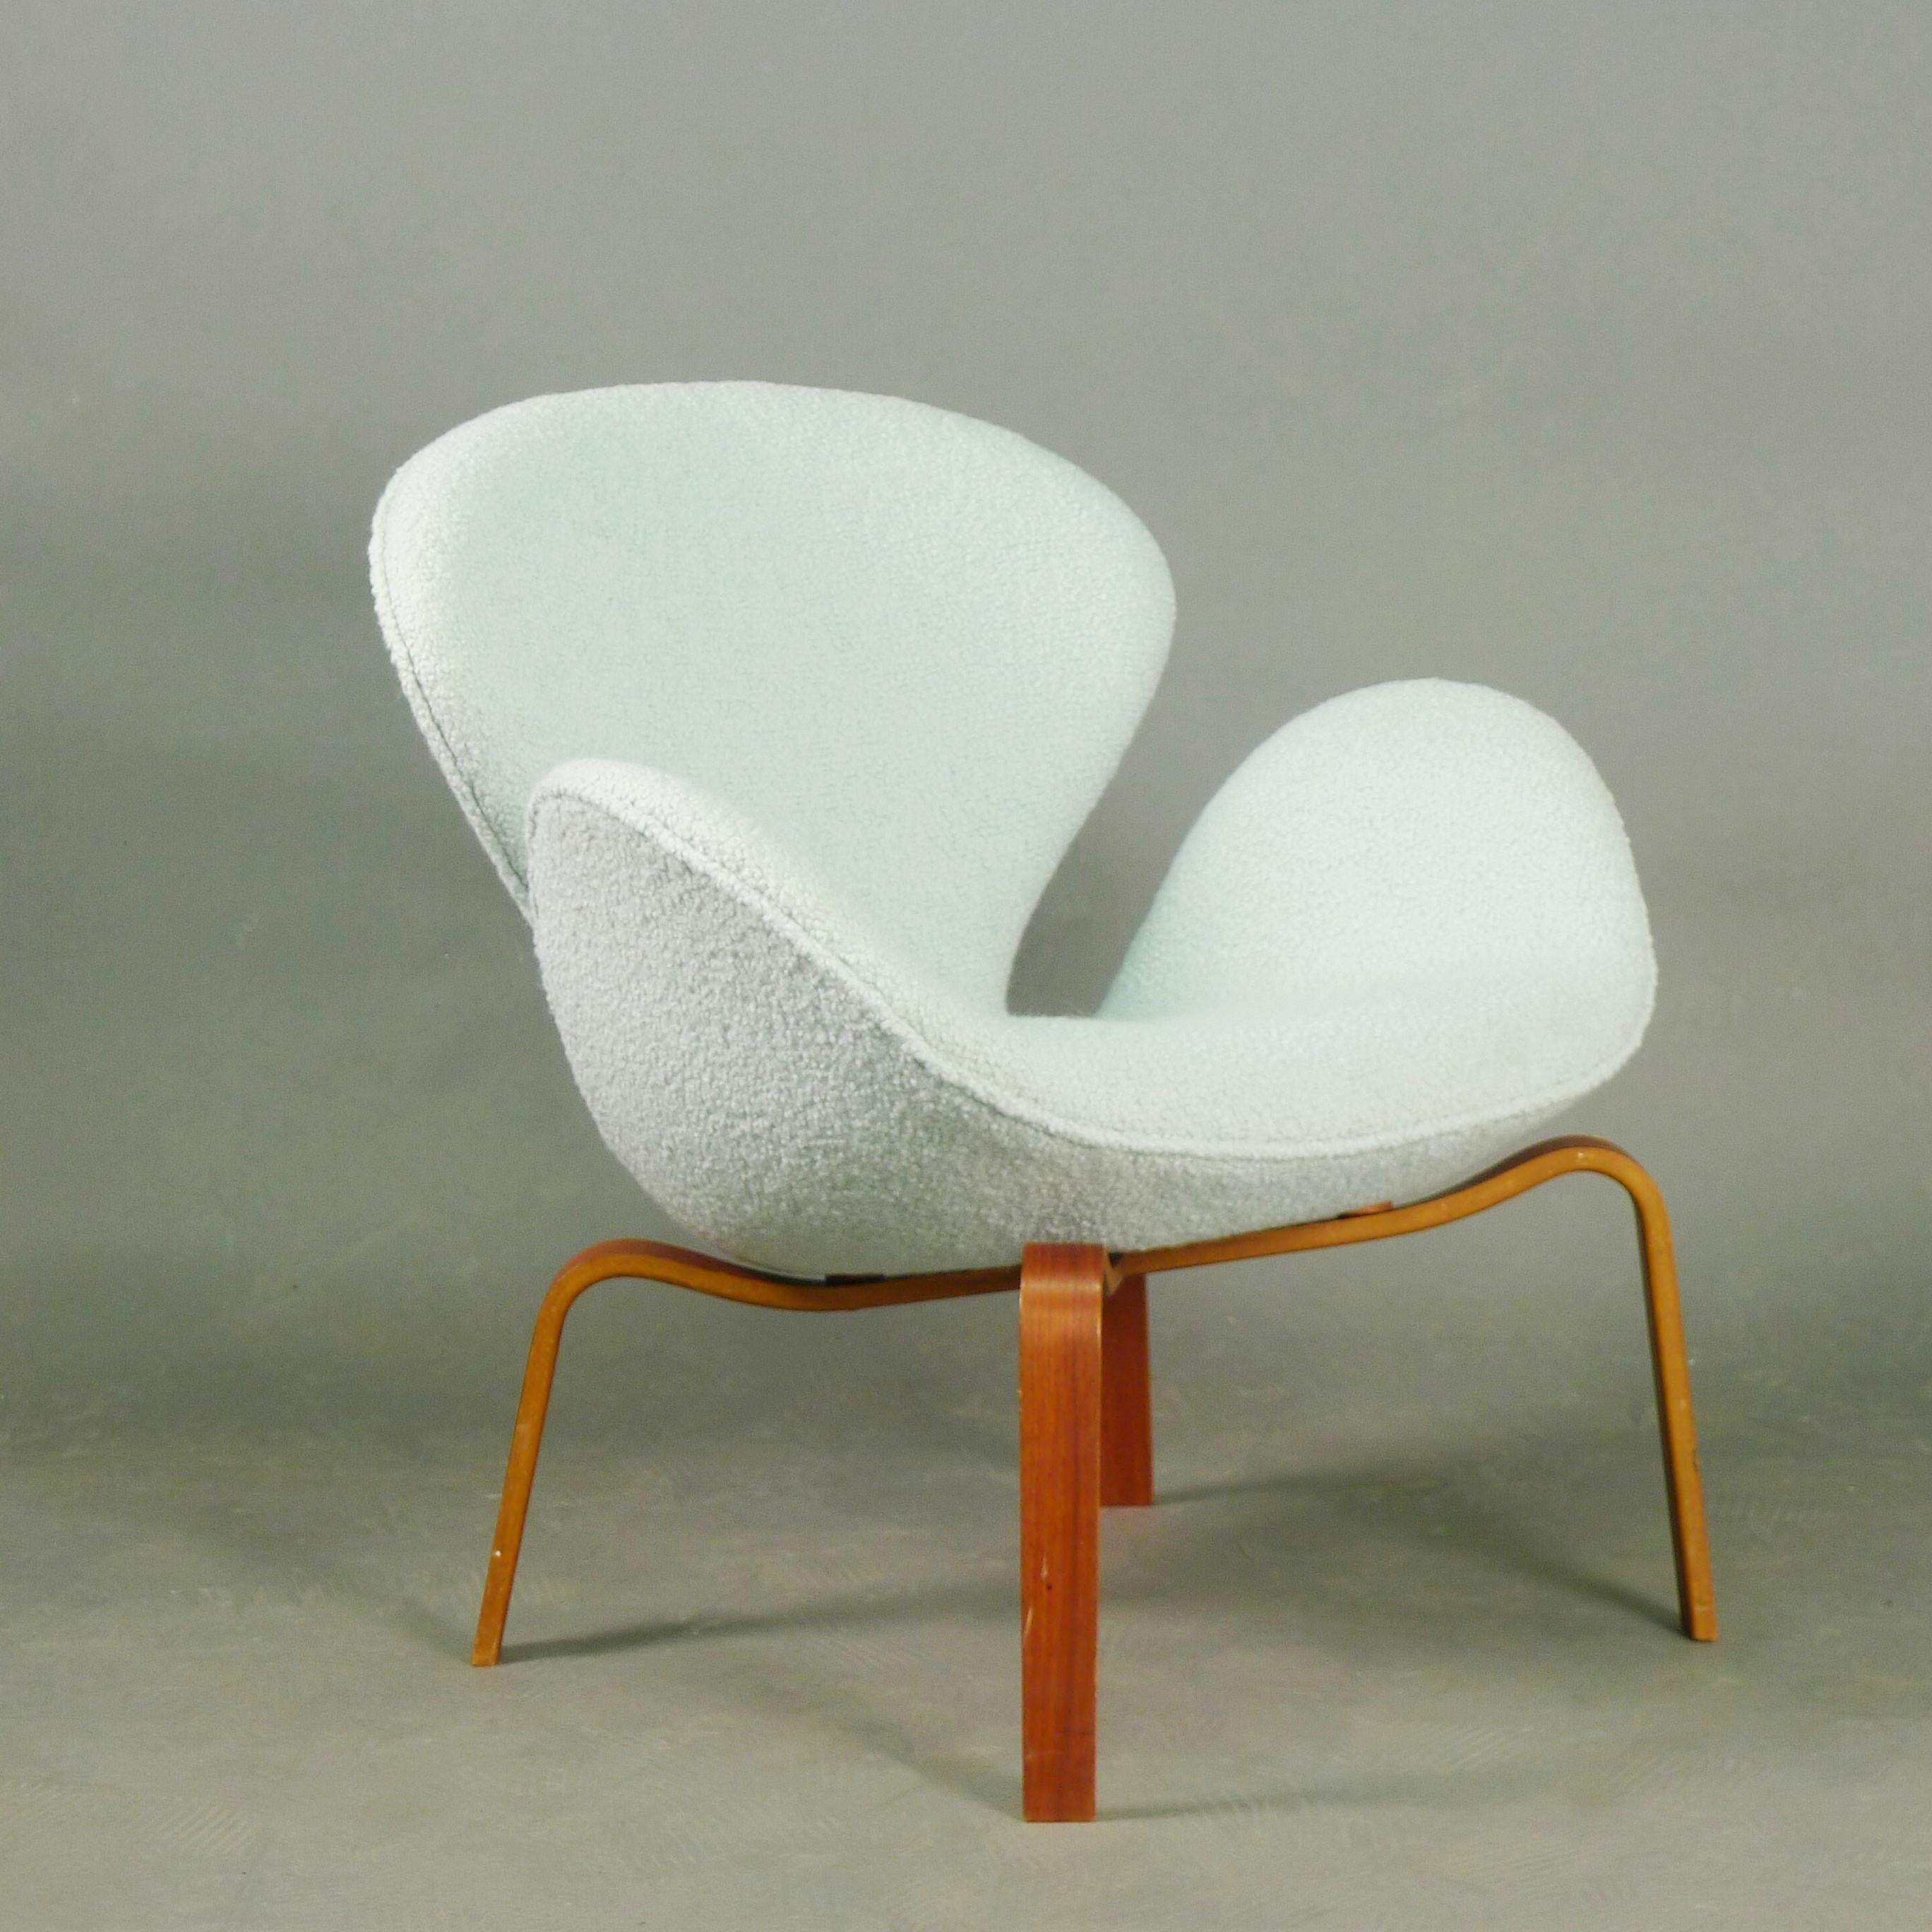 Scandinavian Modern Arne Jacobsen, Swan Chair, rare version wood legs, 1965, by Fritz Hansen, FH4325 For Sale